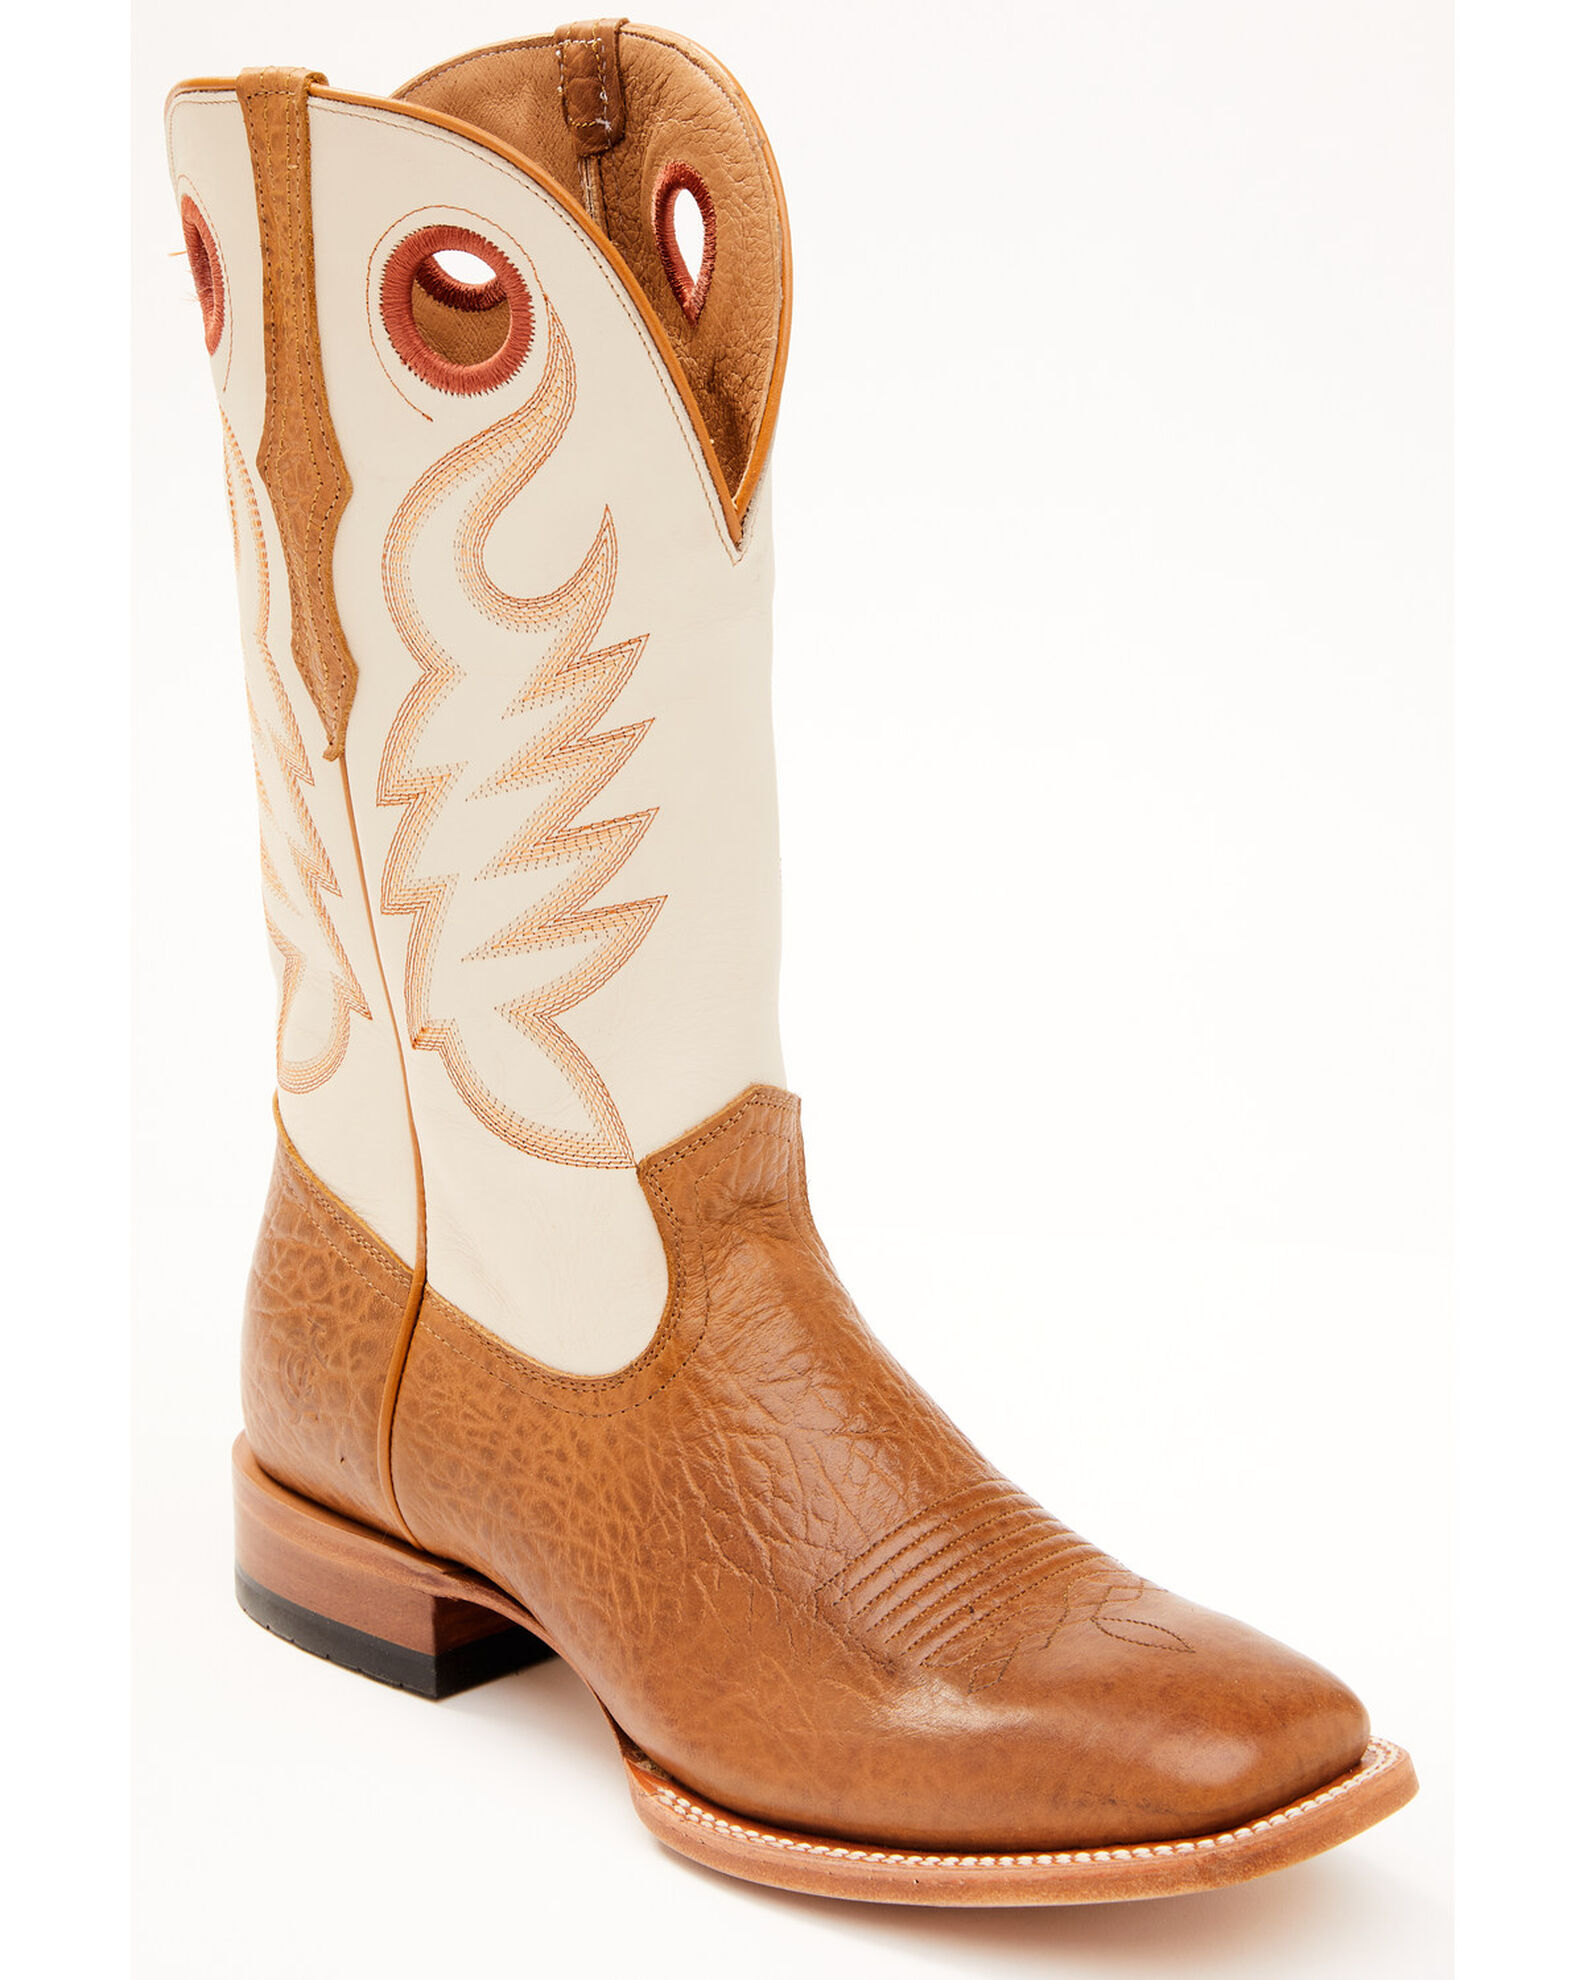 Men's Cowboy Boots & Western Boots ❙ Boot Barn - Boot Barn